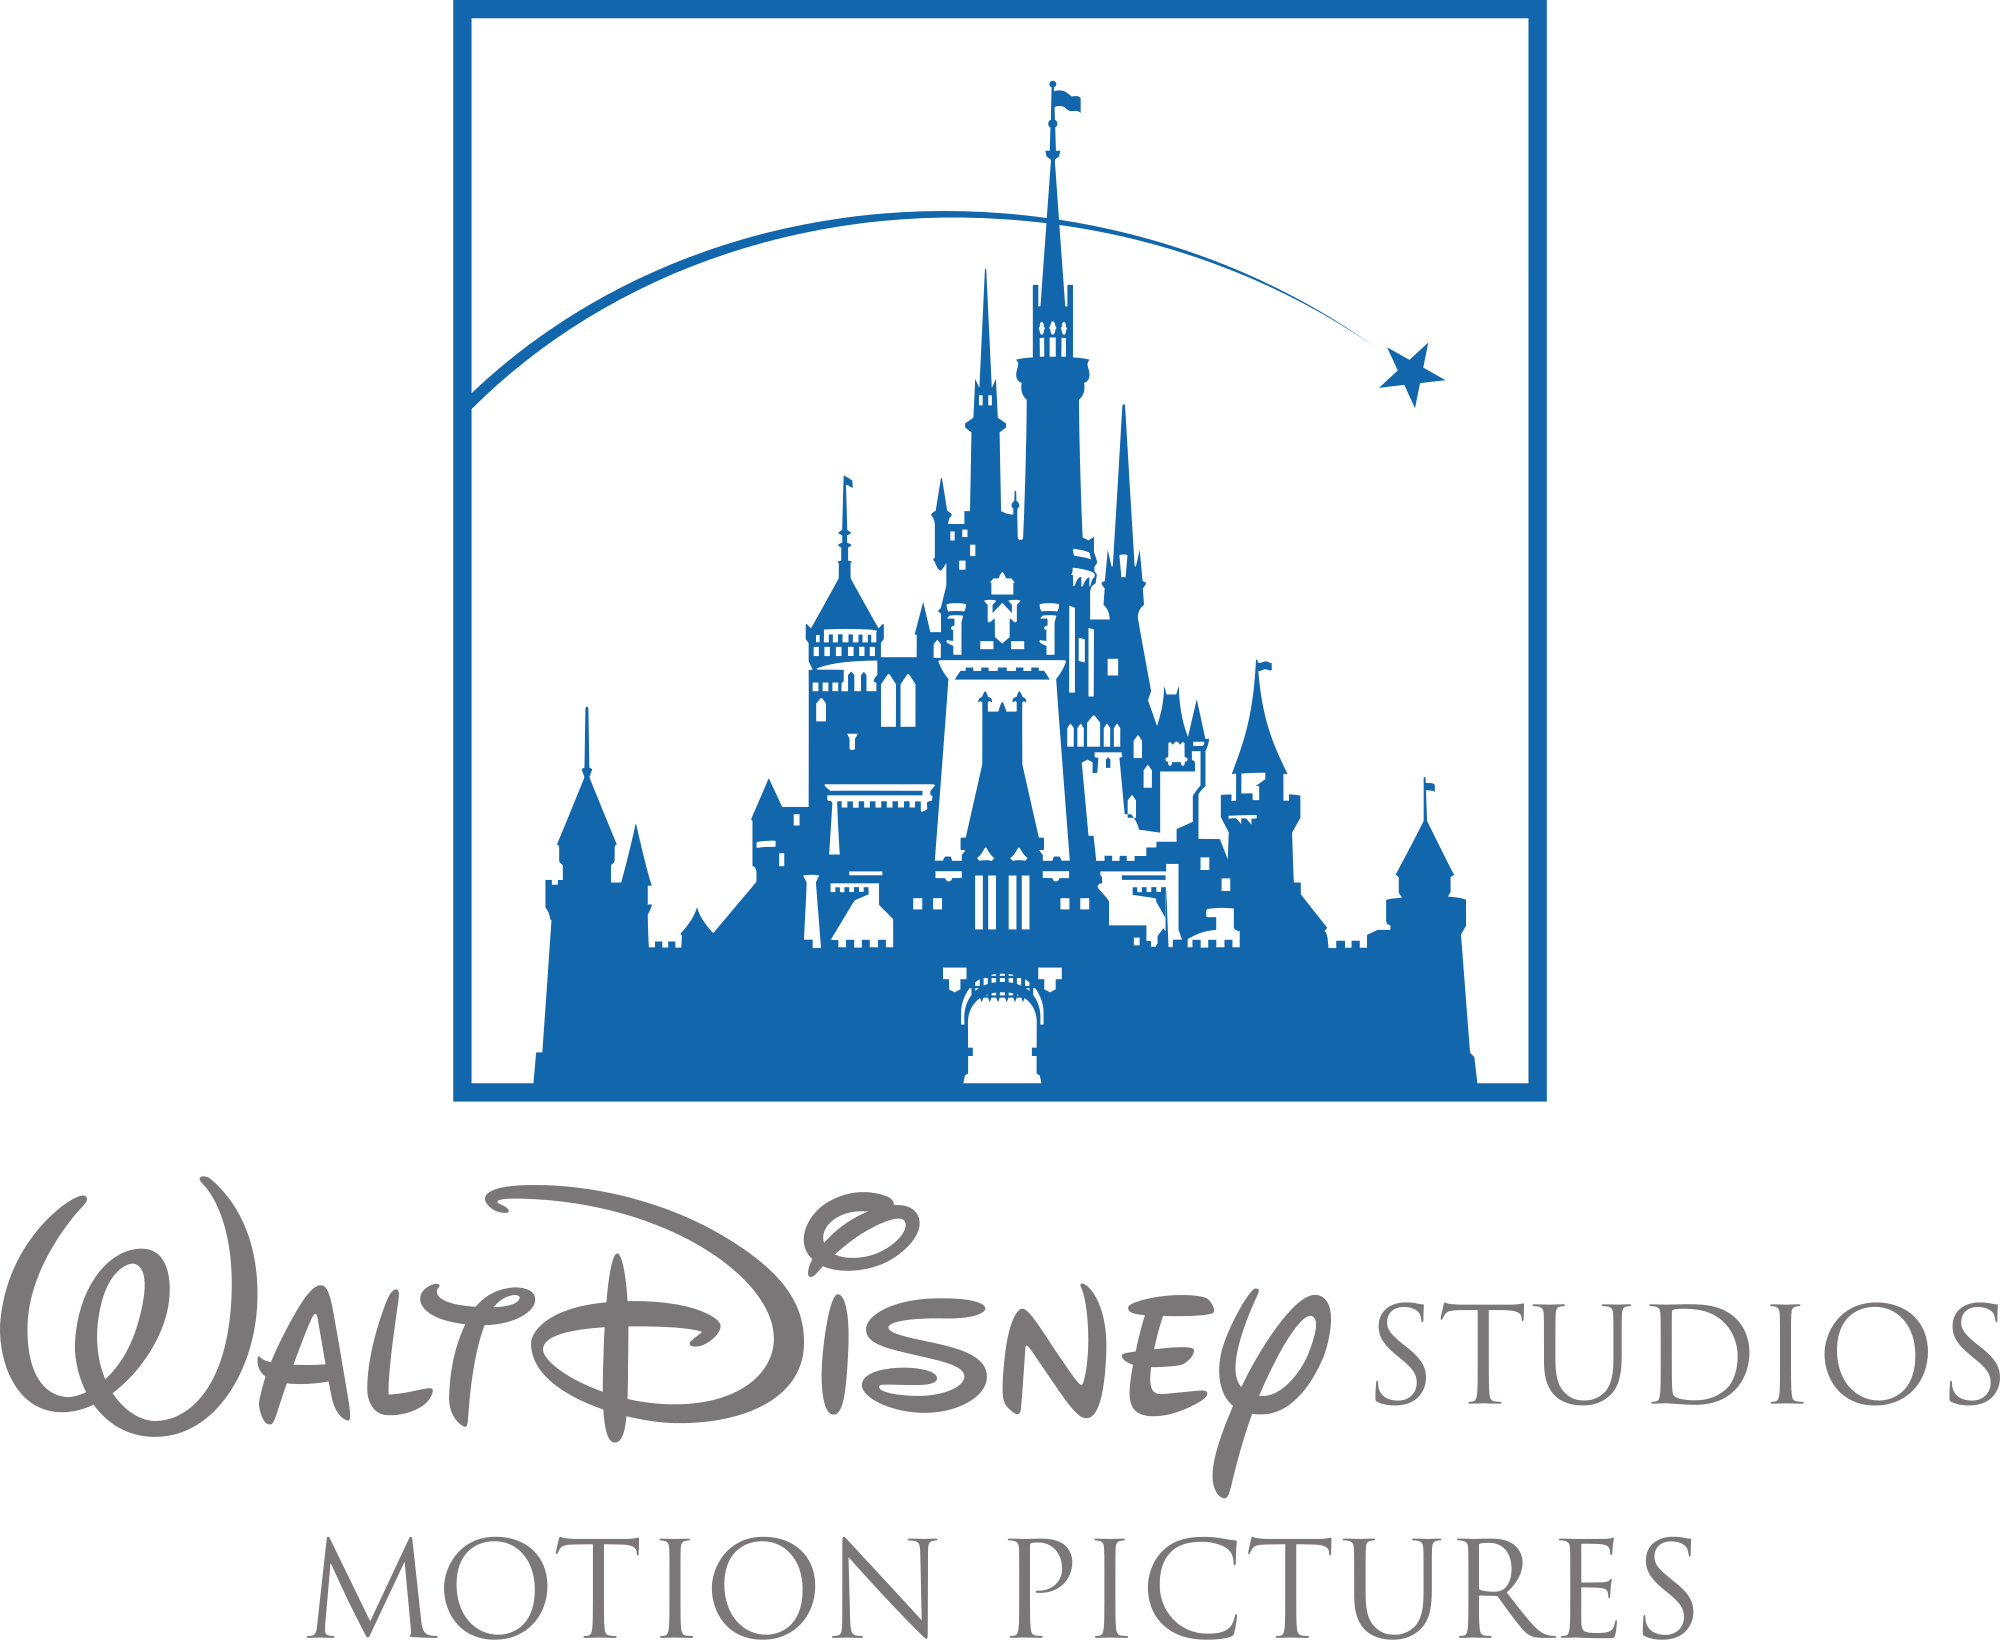 Walt Disney Studios Motion Pictures Logo - Image - 2000px-Walt Disney Studios Motion Pictures logo svg.png ...